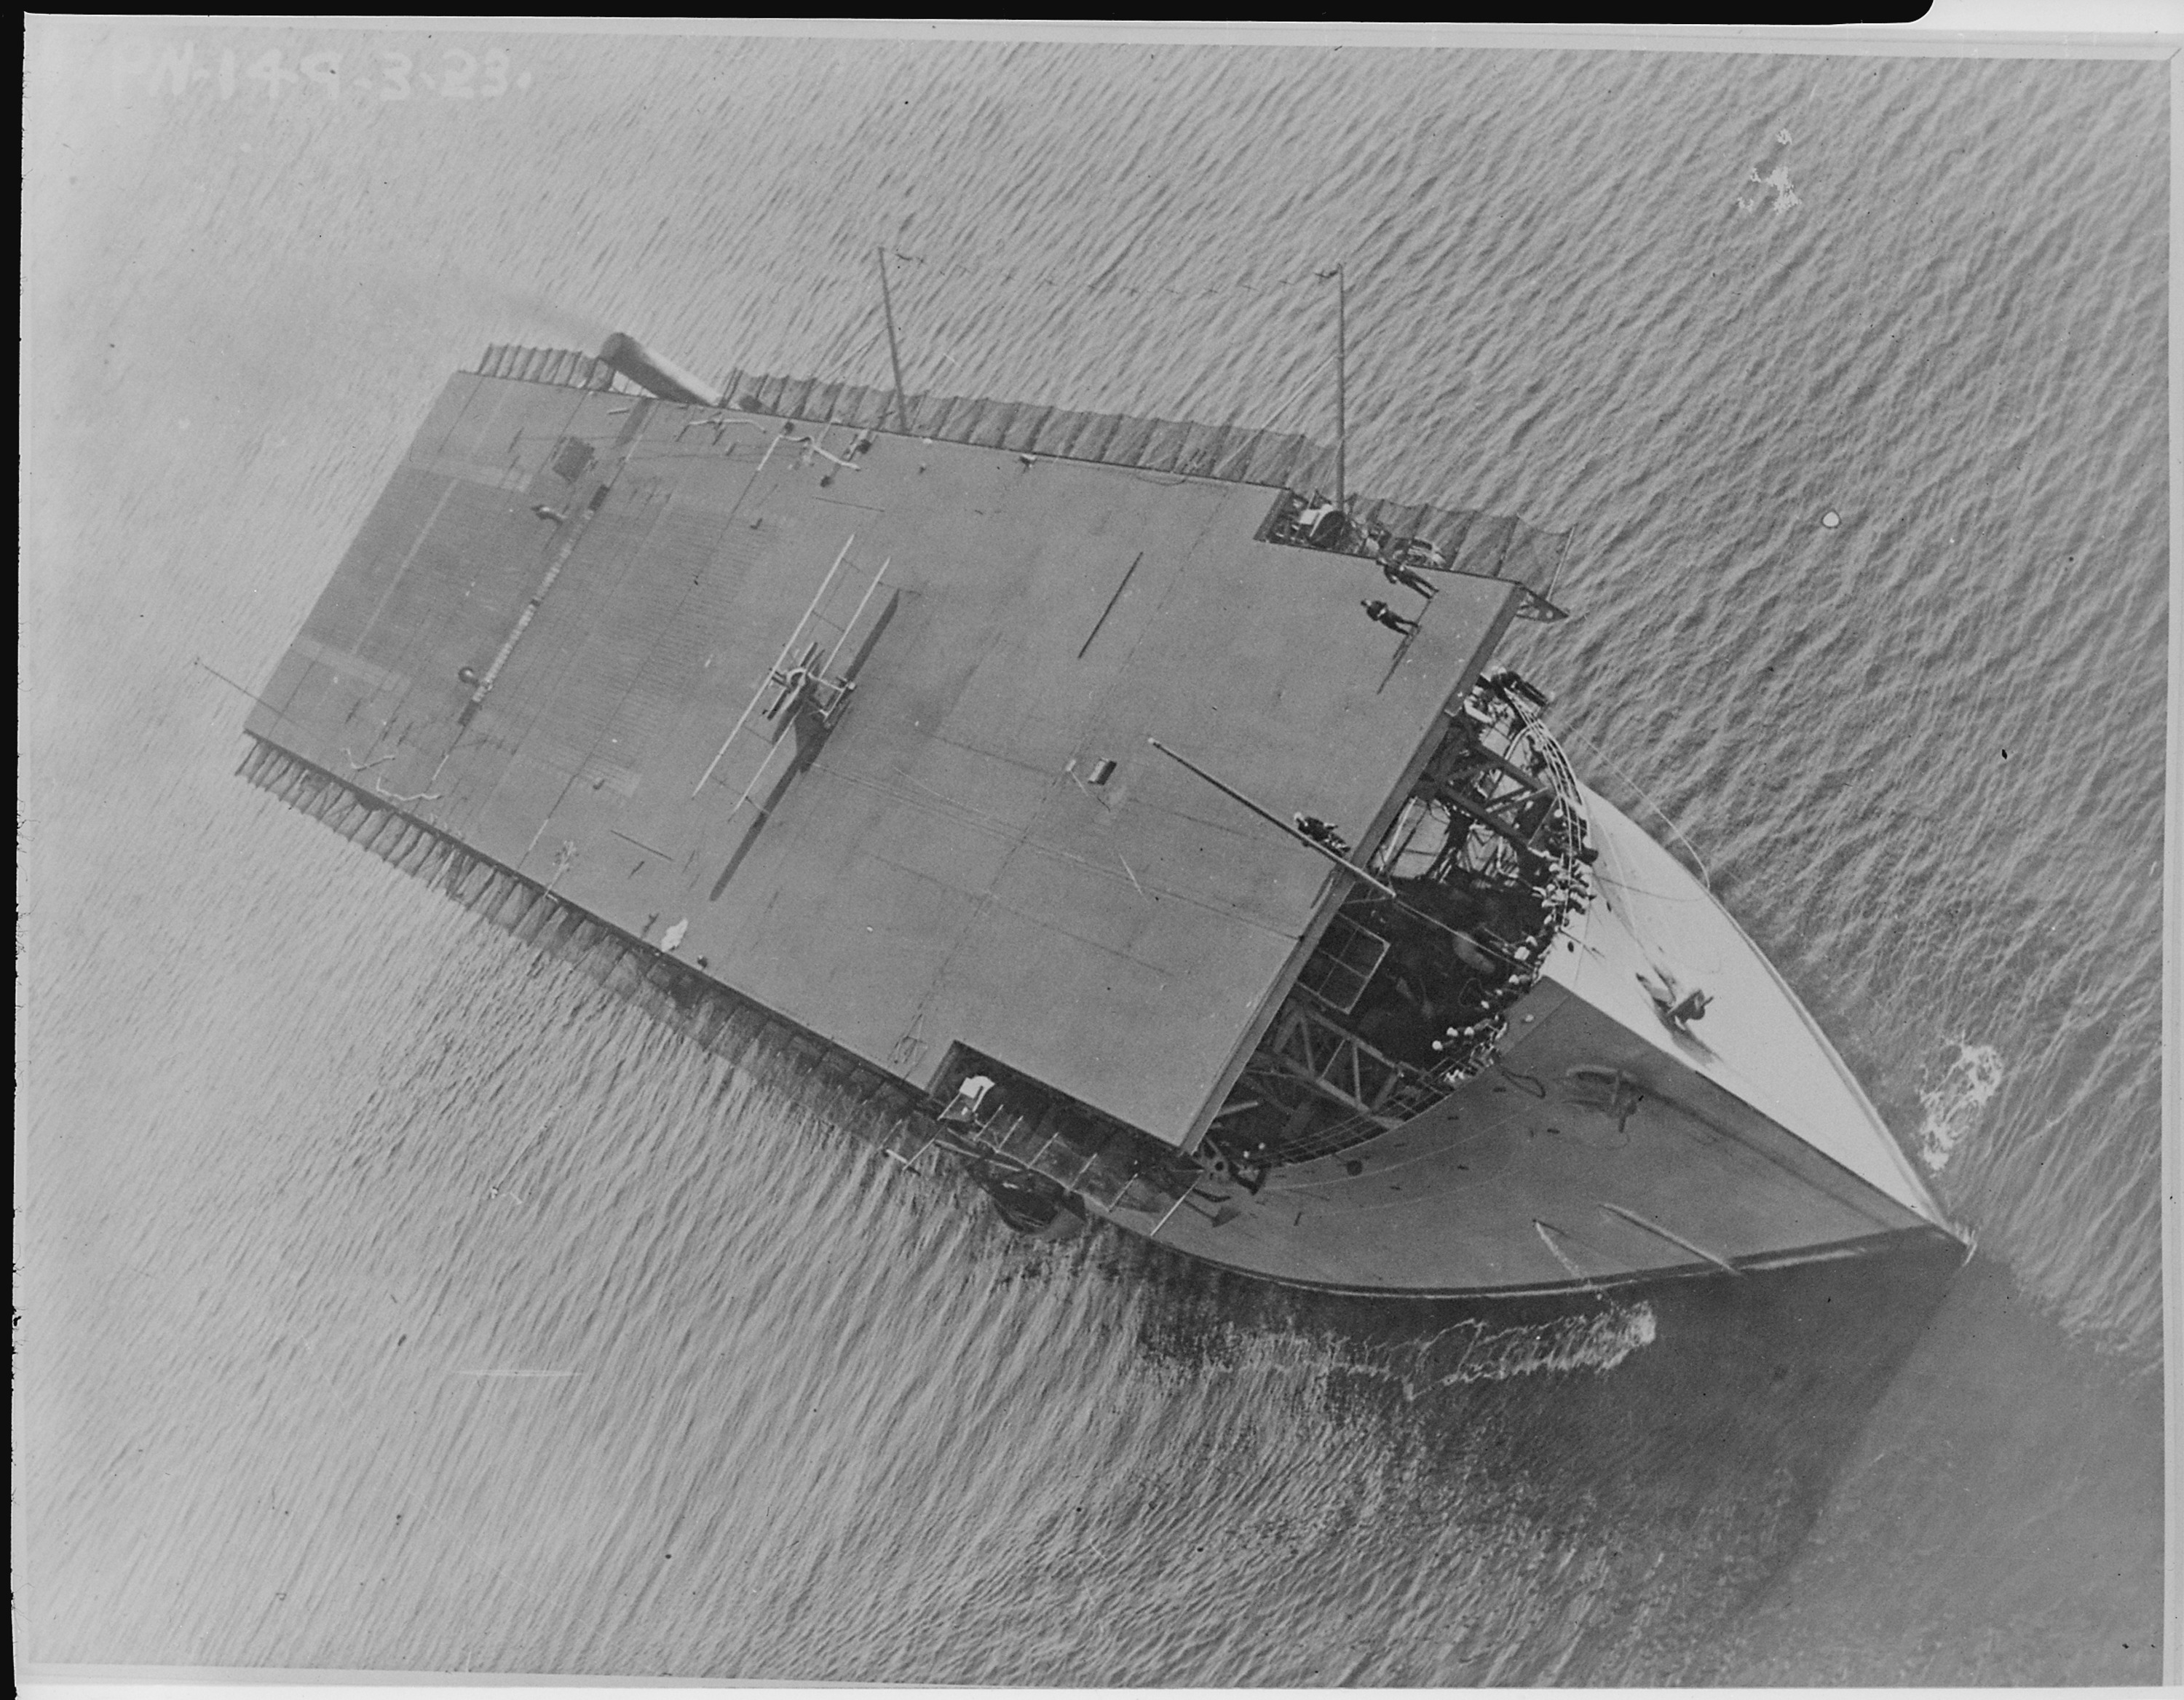 Langley (CV1), formerly the Jupiter. Aerial, bow on, plane on deck, 08-03-1923 - NARA - 520639